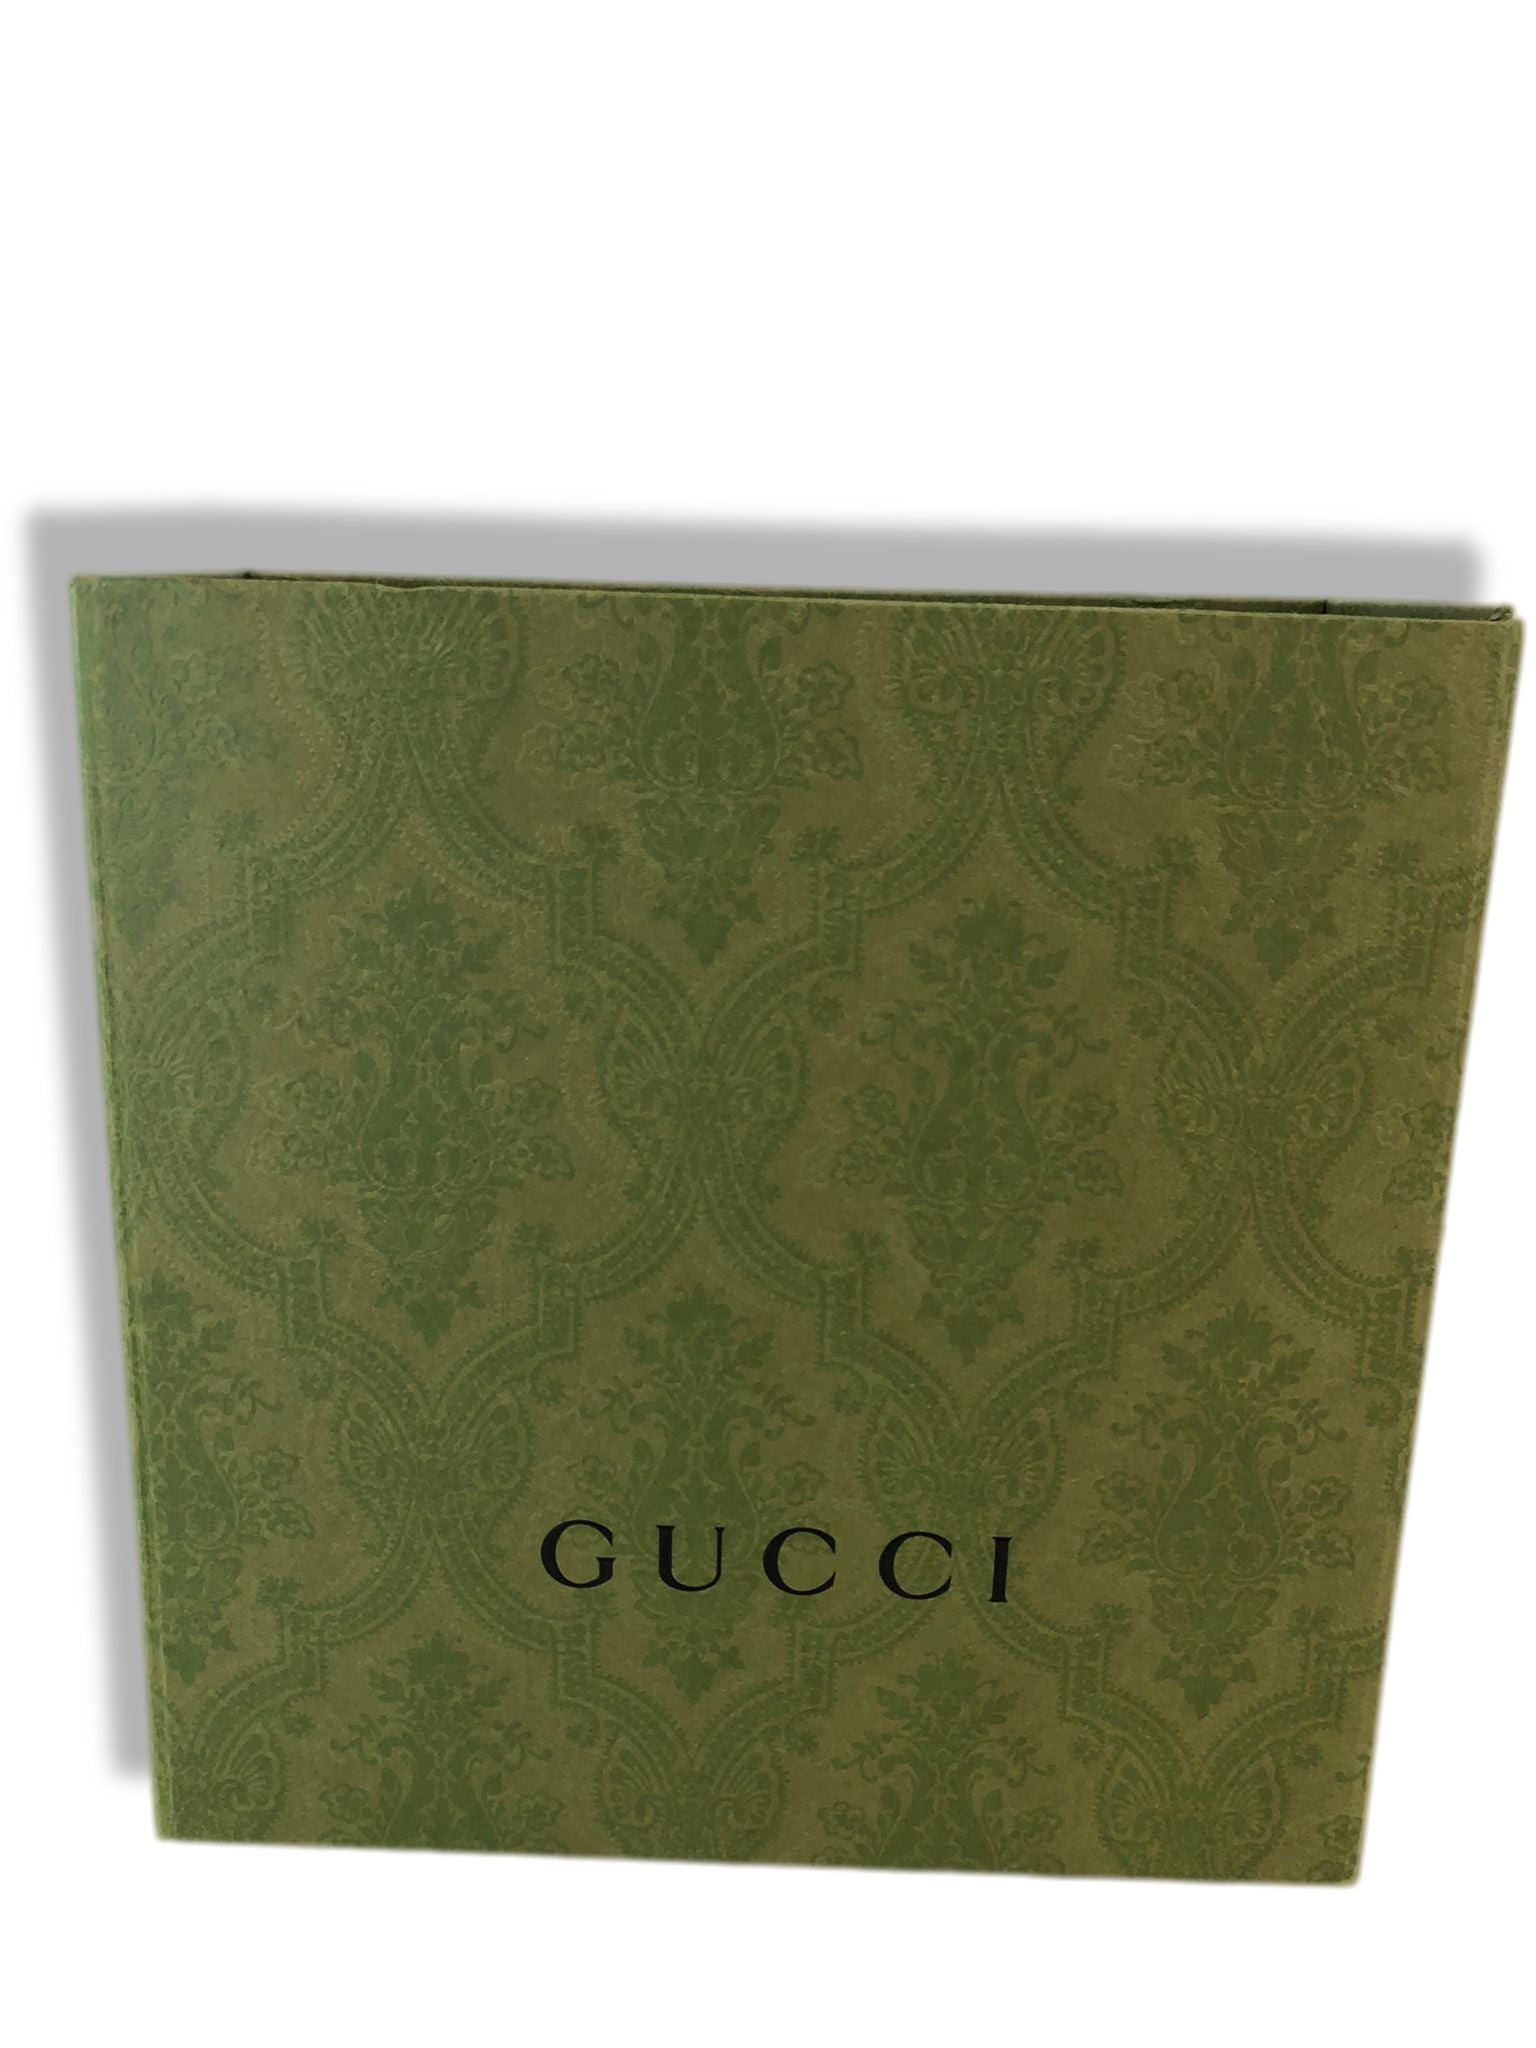 GUCCI Green Gift Box EMPTY 12.5” x 6.75” x 4.25” + Tissue Paper